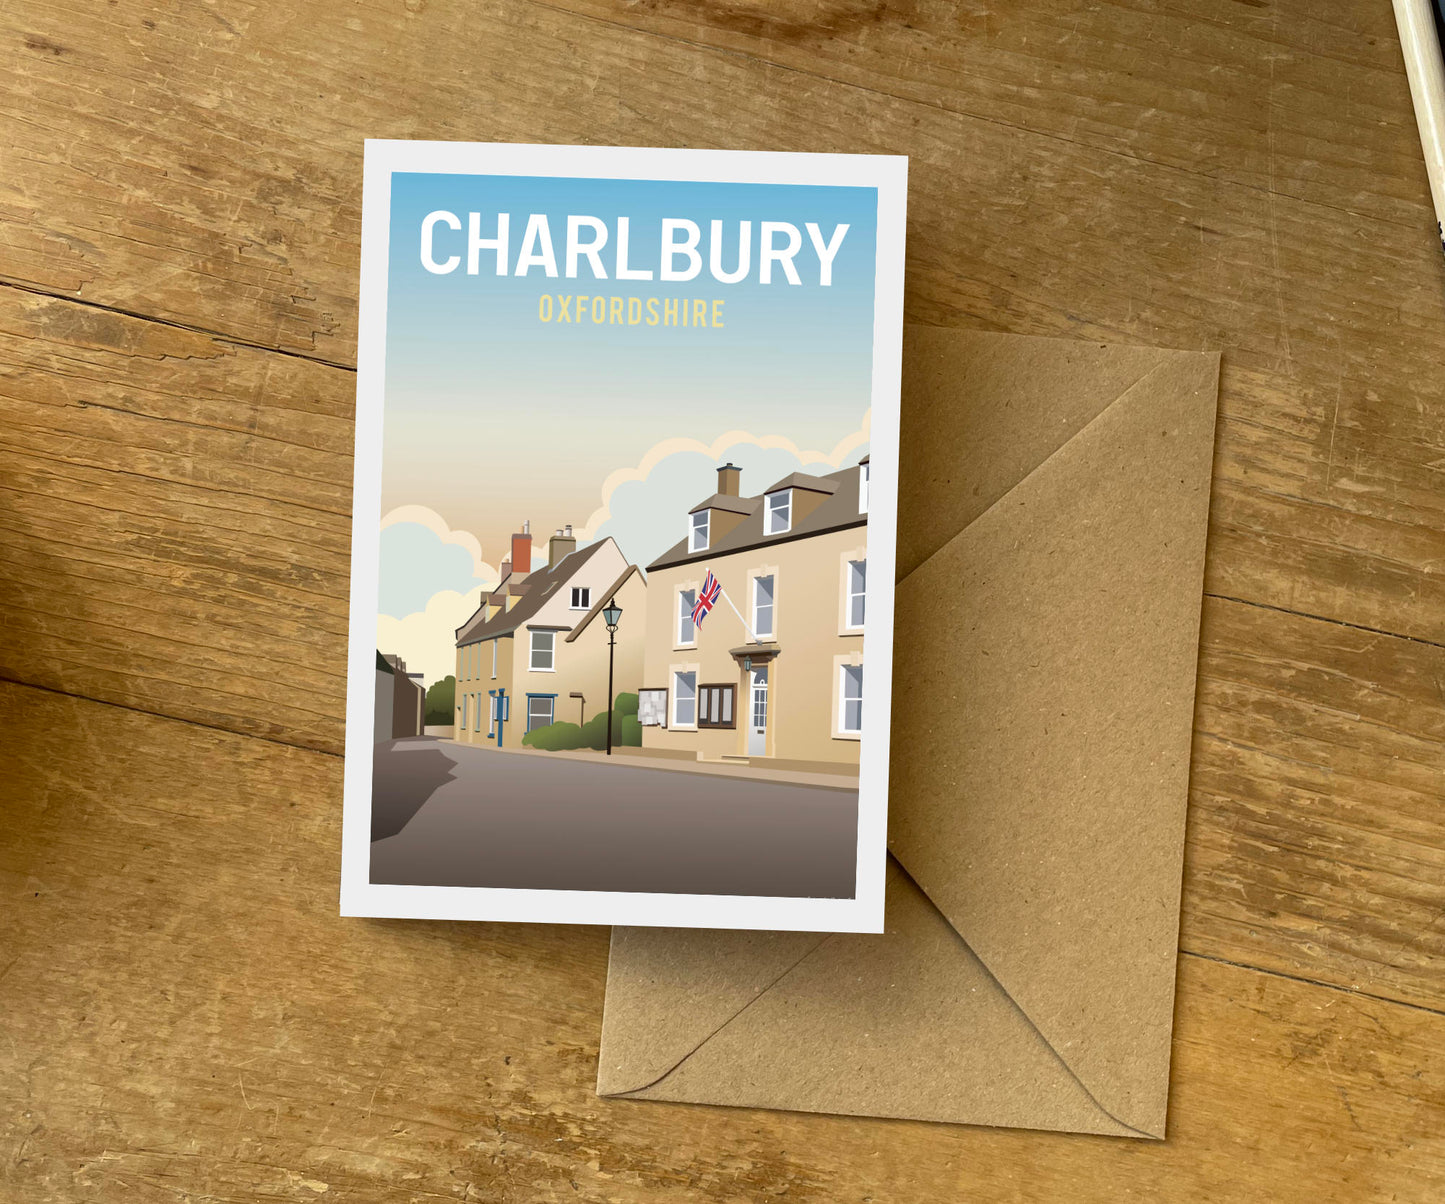 Charlbury Greeting Card